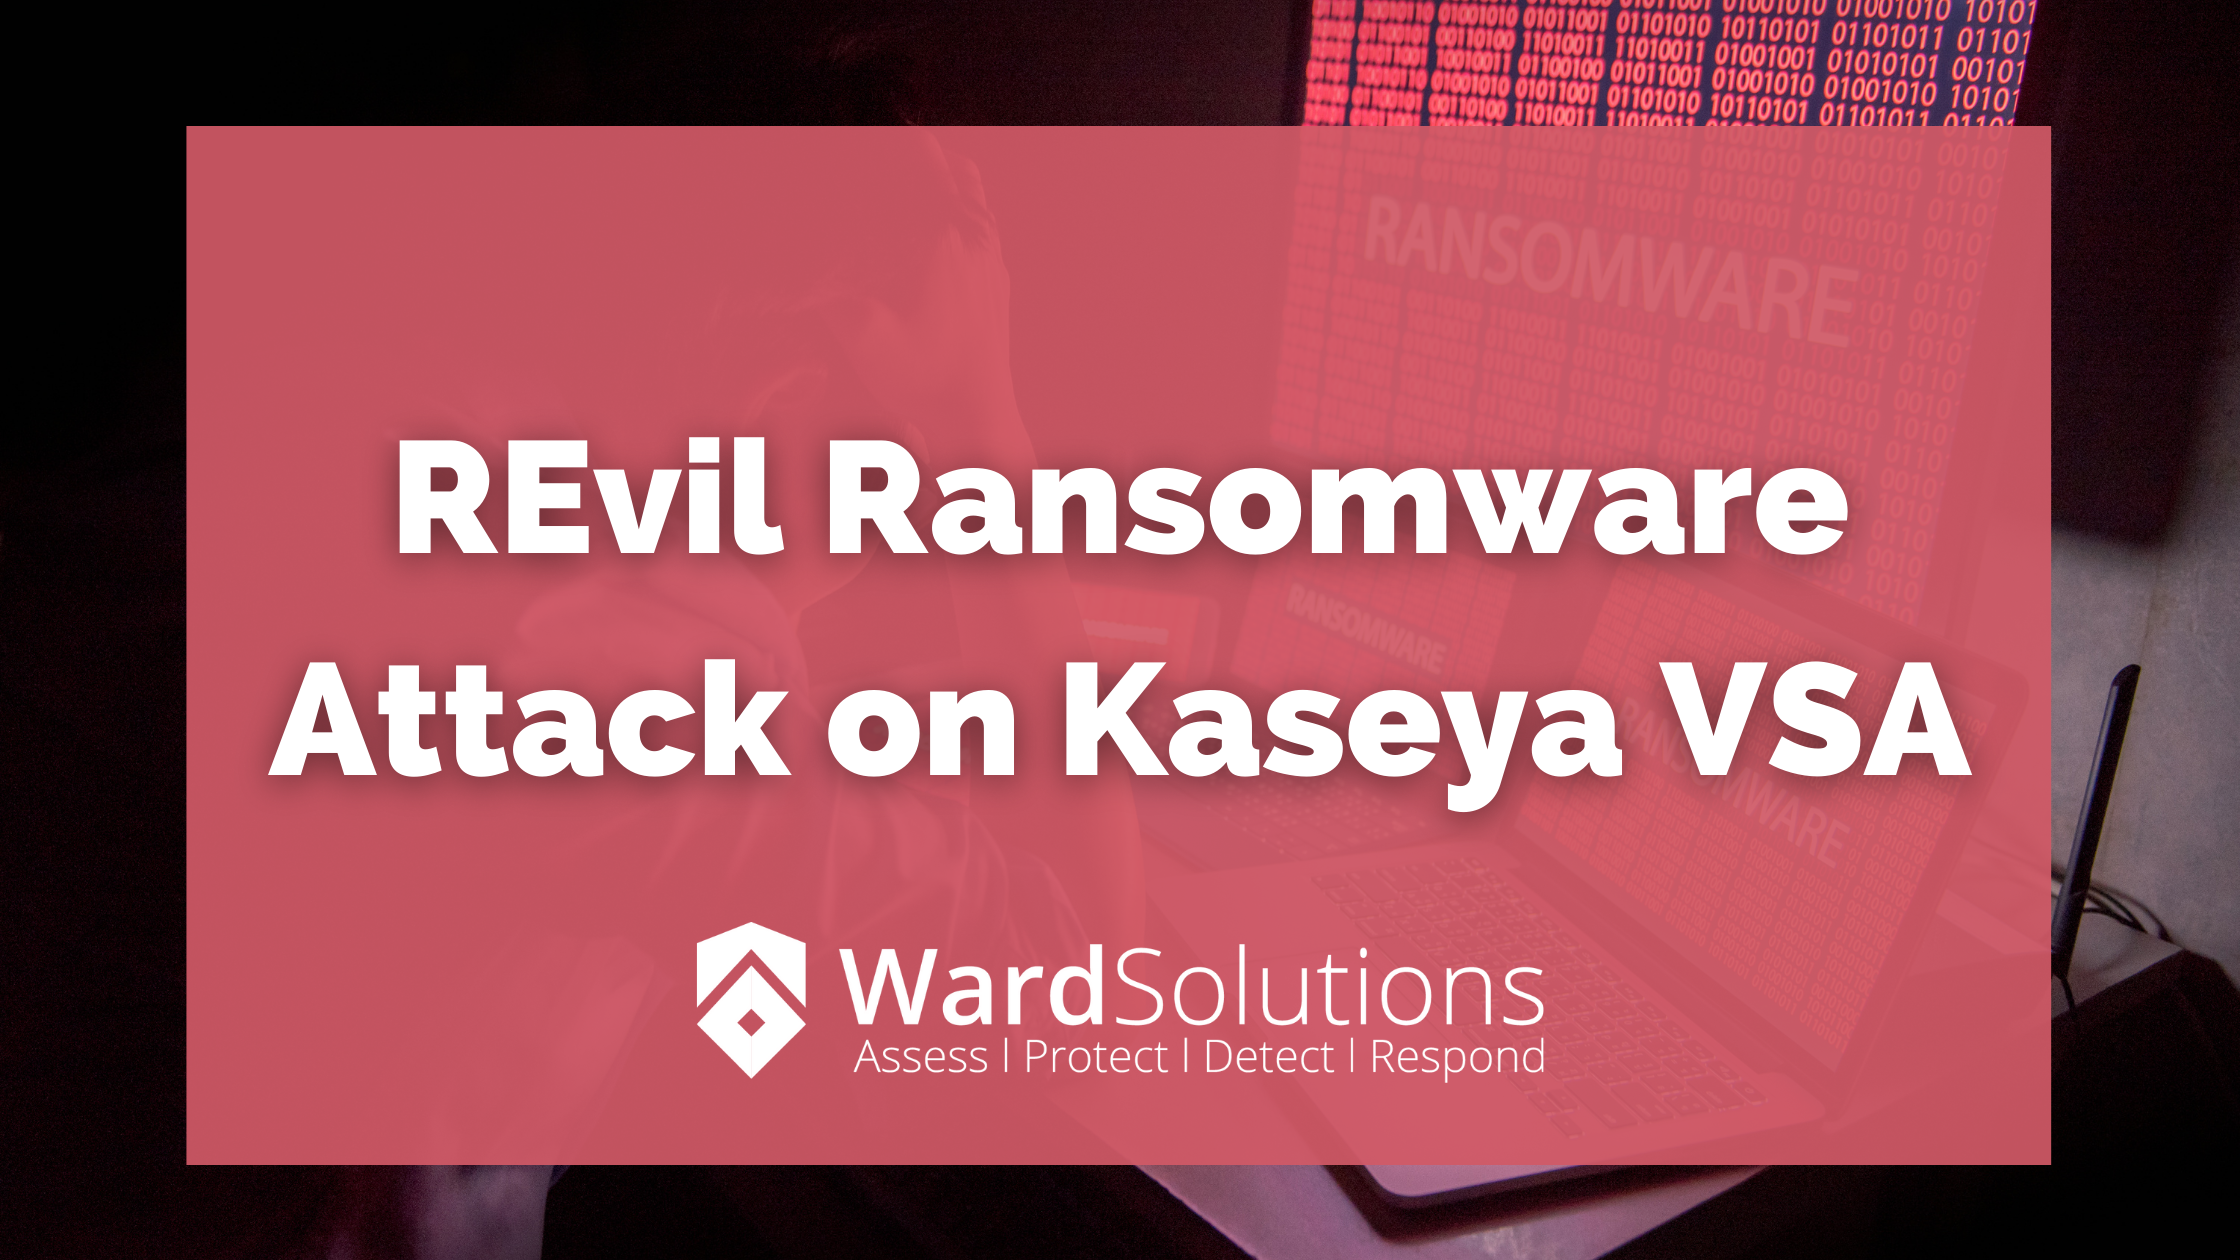 Security Advisory: REvil Ransomware Attack on Kaseya VSA